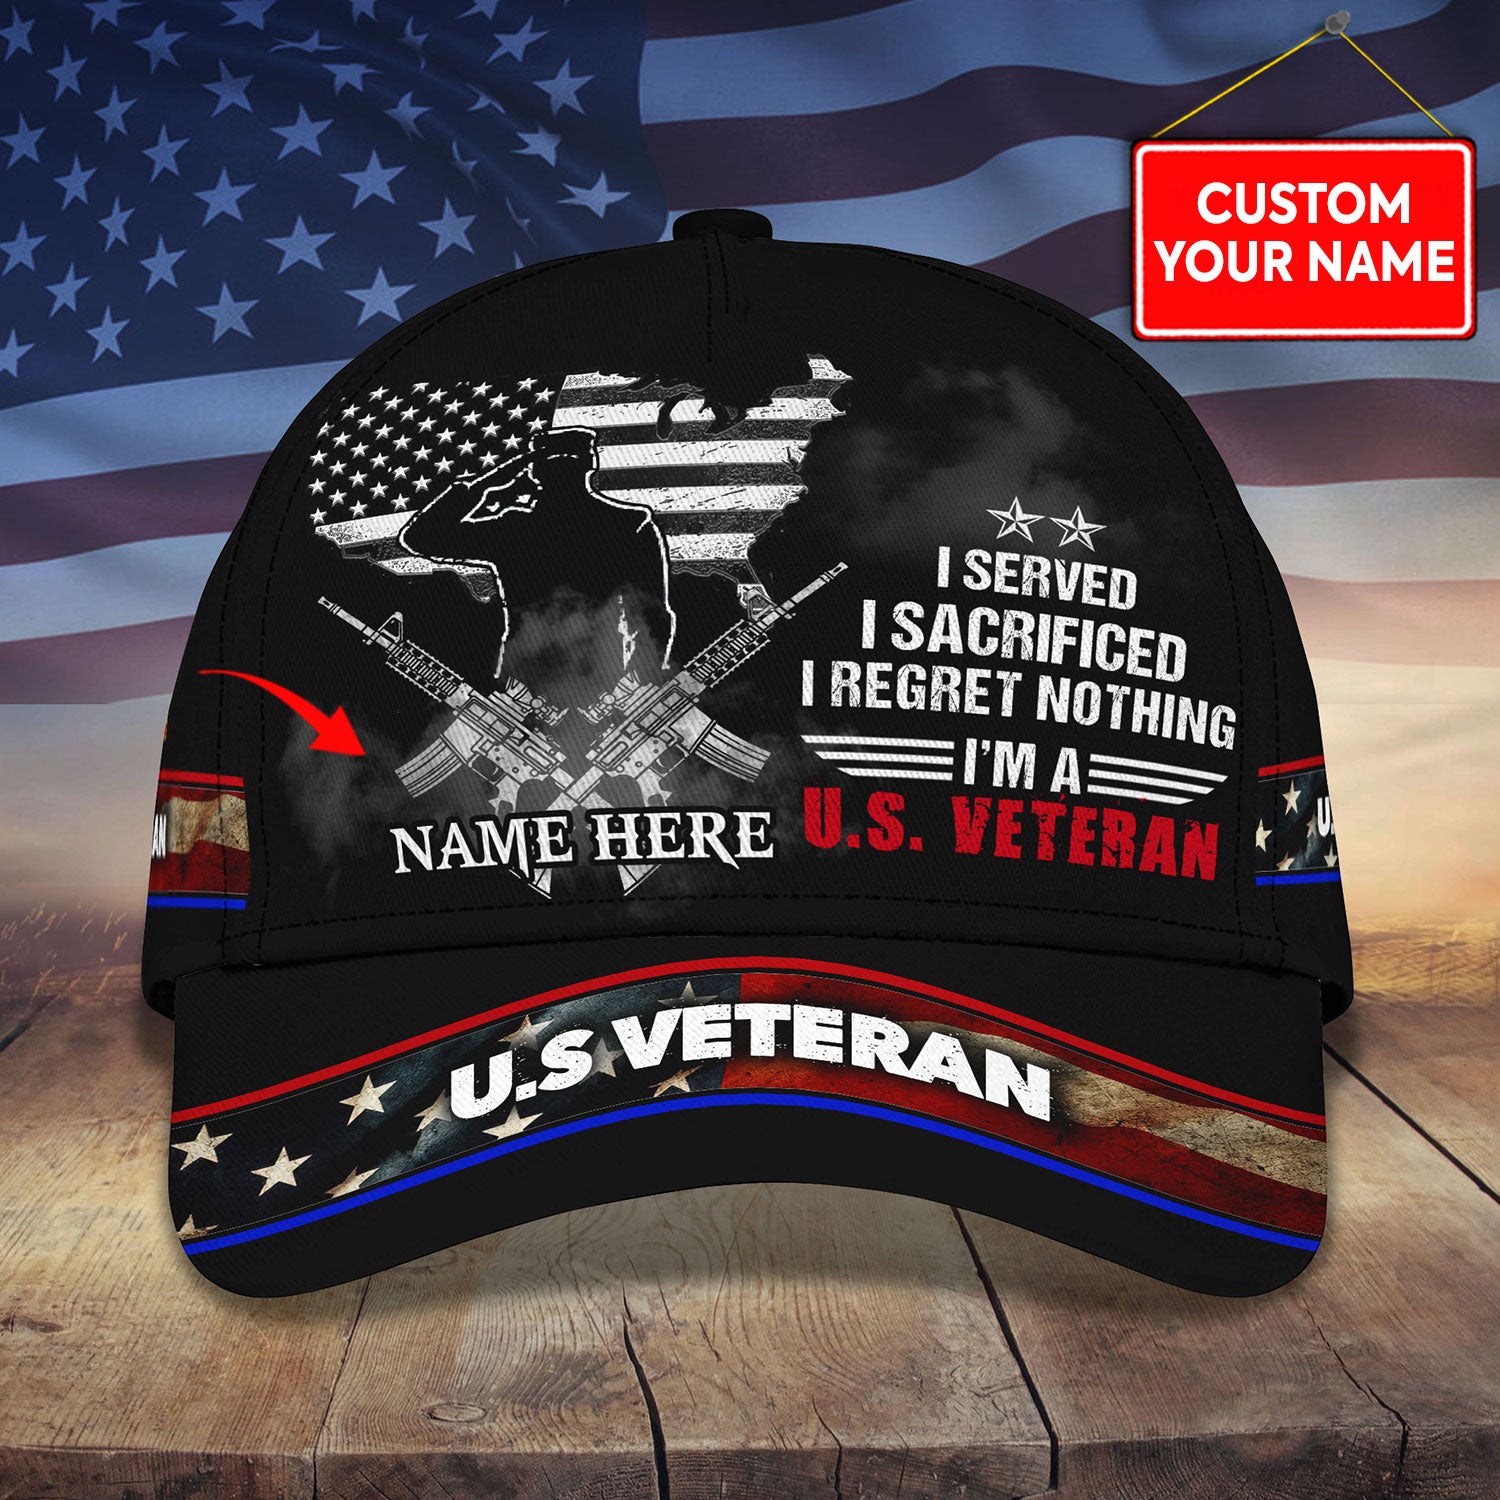 I Served - I Sacrificed - I Regret Nothing I Am U.S. Veteran, Customized U.S. Veteran Cap - Gift For Veteran